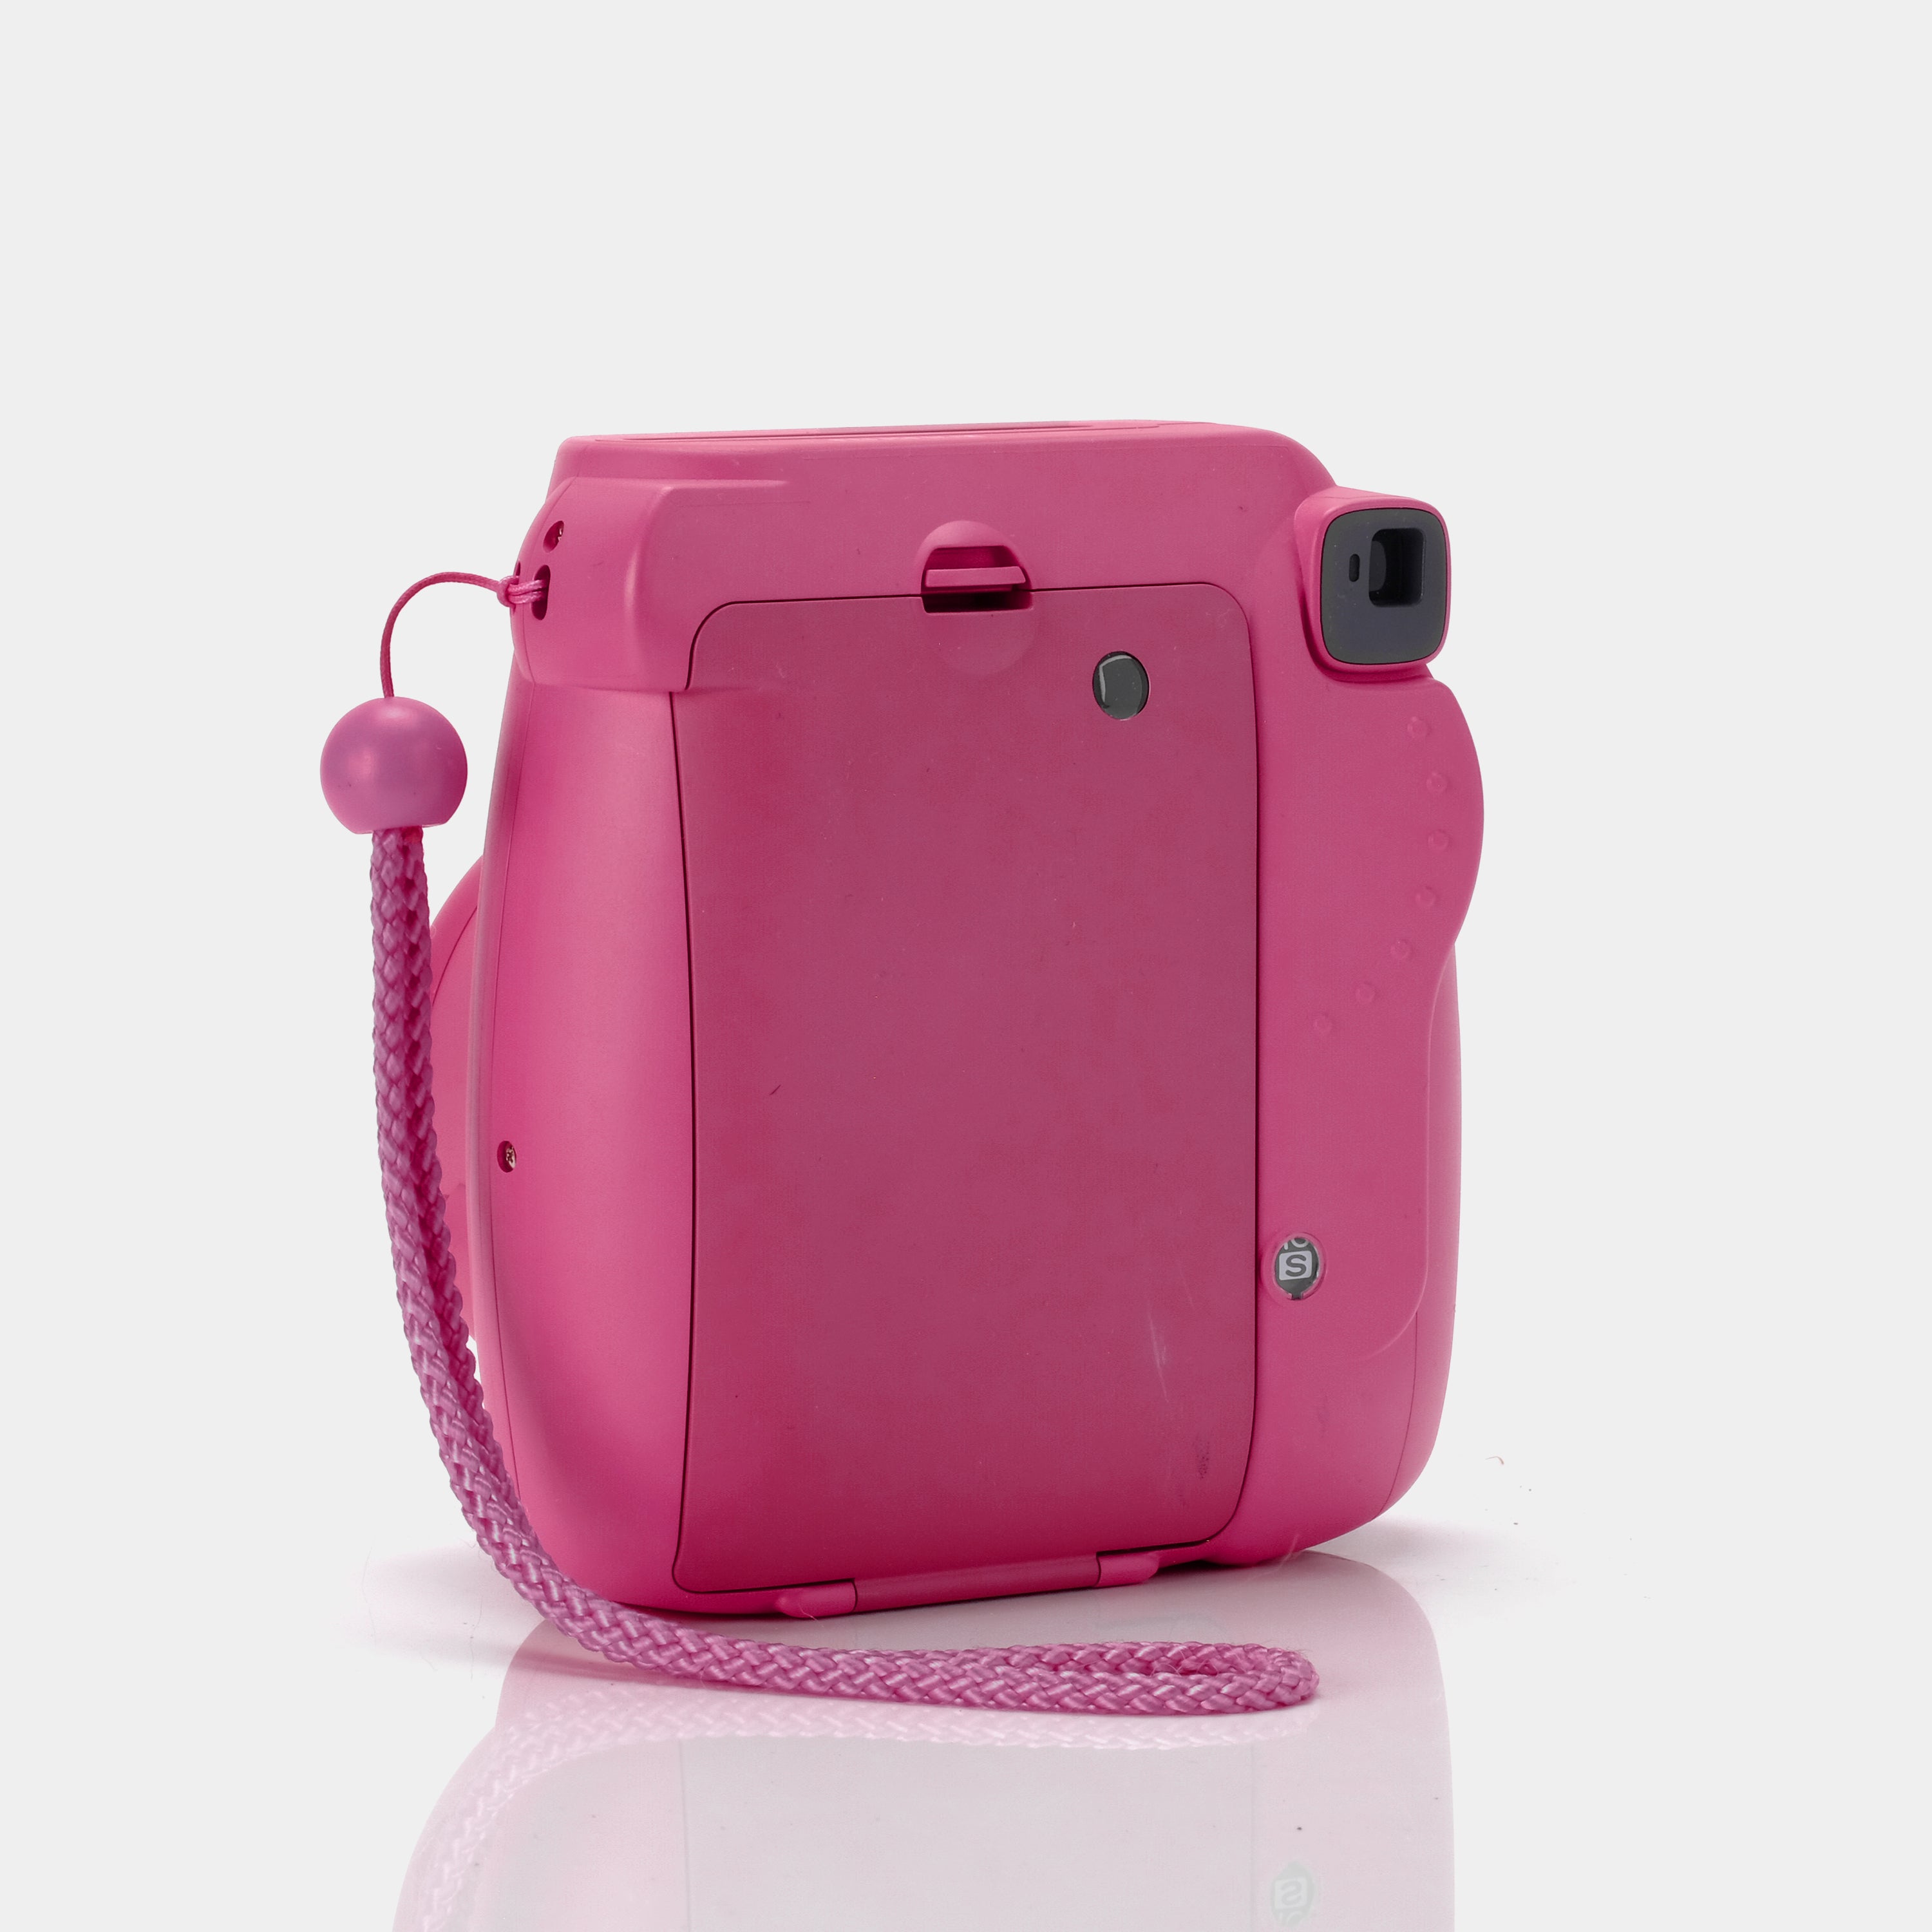 Fujifilm Instax Mini 8 Pink Instant Film Camera With Grey Bag - Refurbished